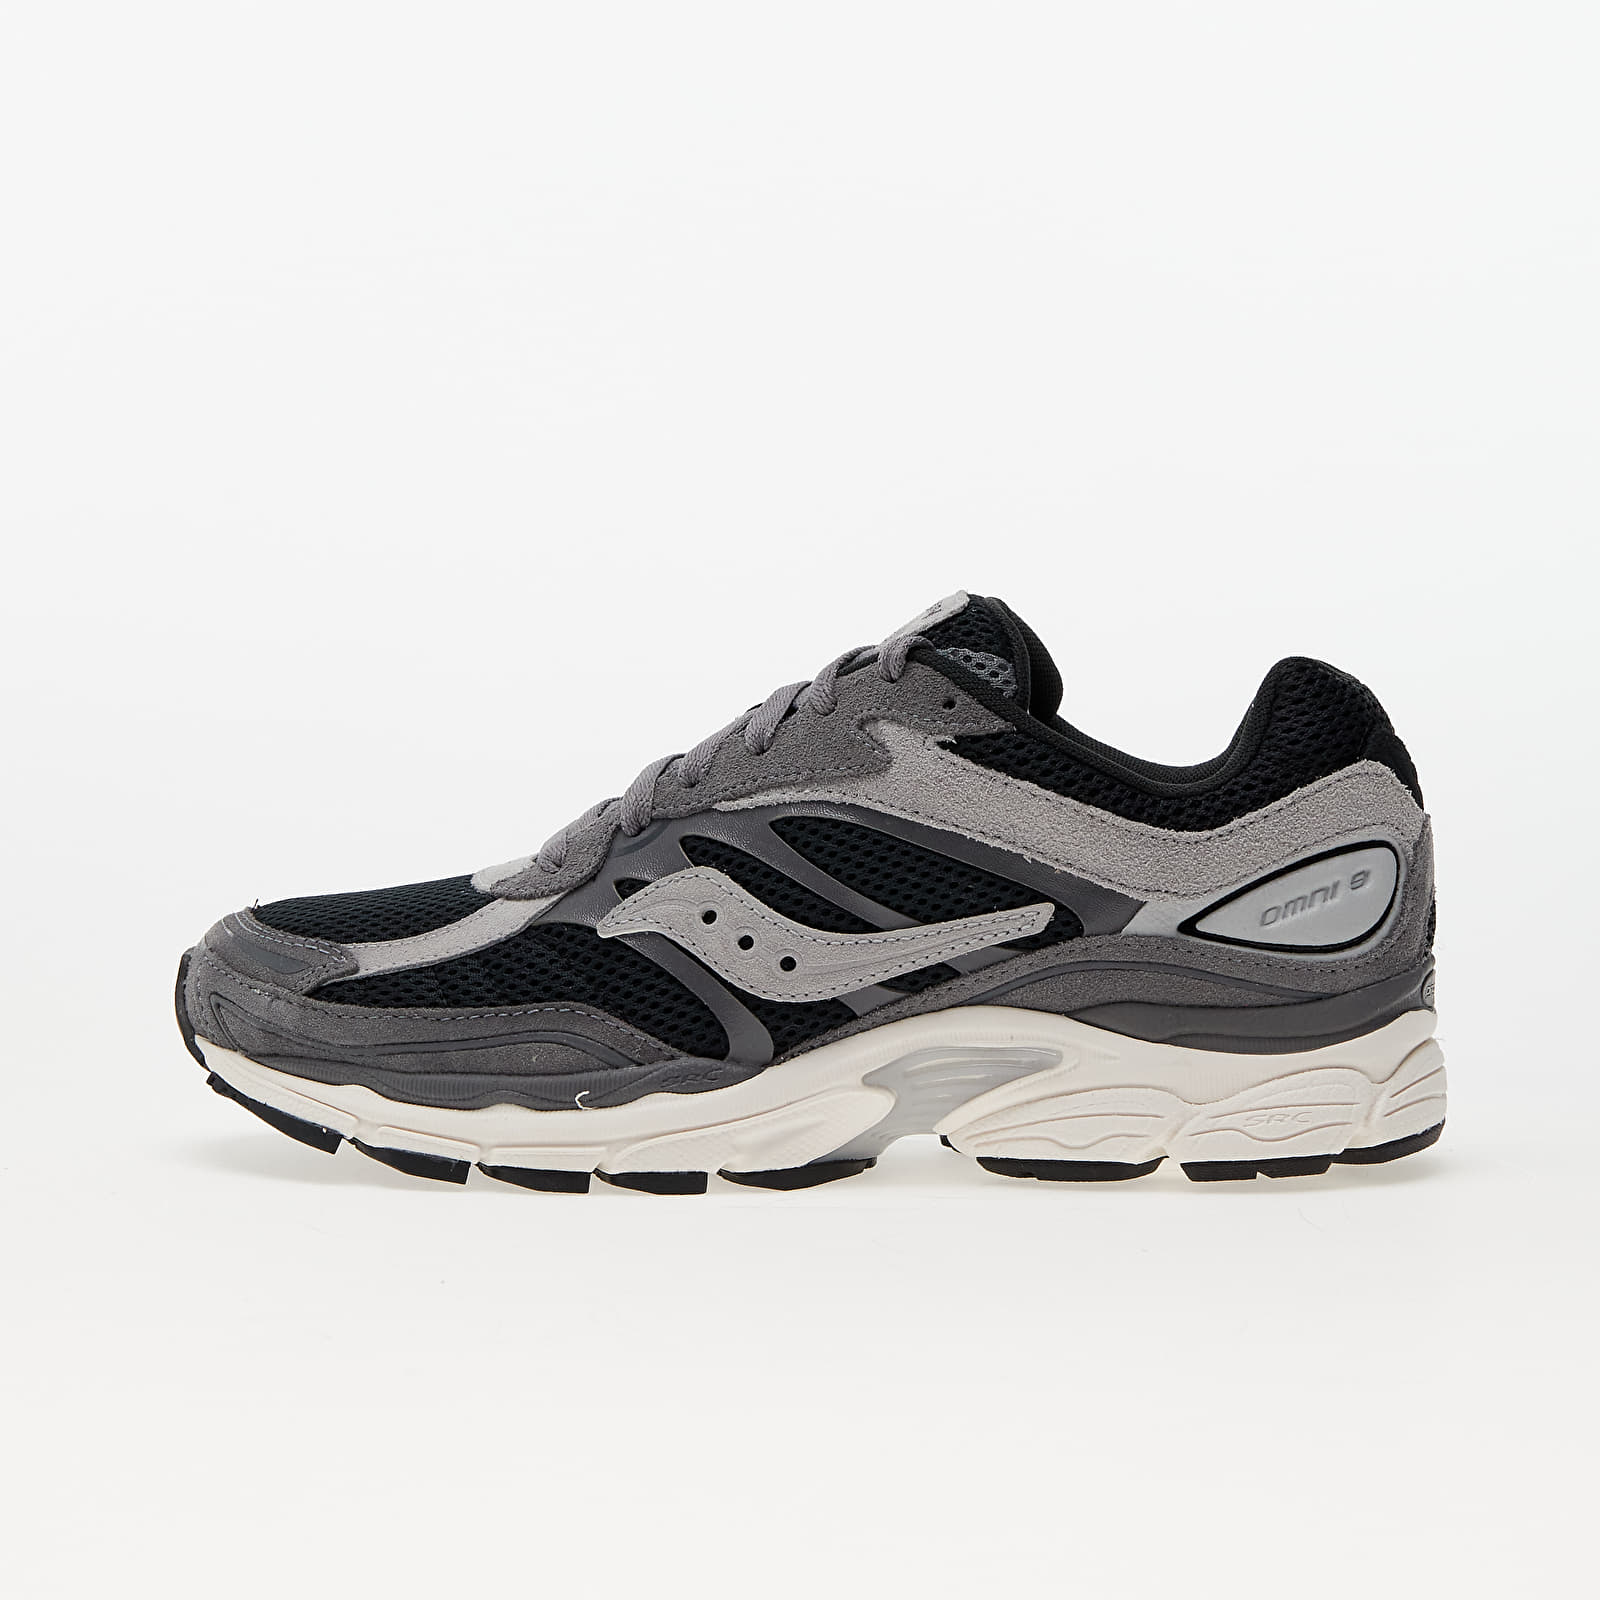 Men's shoes Saucony Progrid Omni 9 Grey/ Black